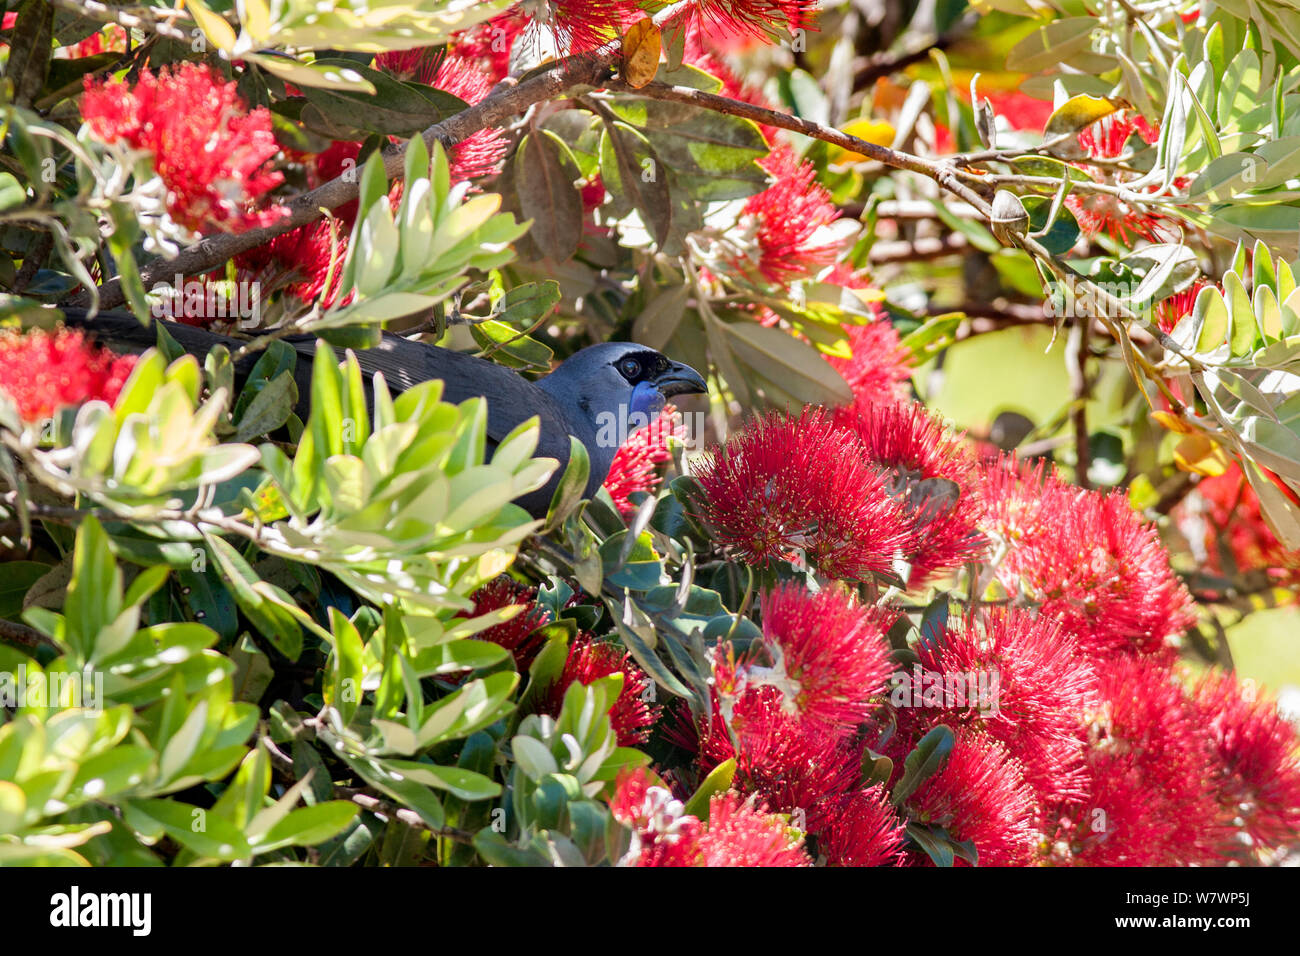 Adultos (kokako Callaeas wilsoni) encaramado en una floración árbol Pohutukawa (Metrosideros excelsa) y alimentándose de néctar. Isla Tiritiri Matangi, Auckland, Nueva Zelandia, en diciembre. Especies en peligro de extinción. Foto de stock